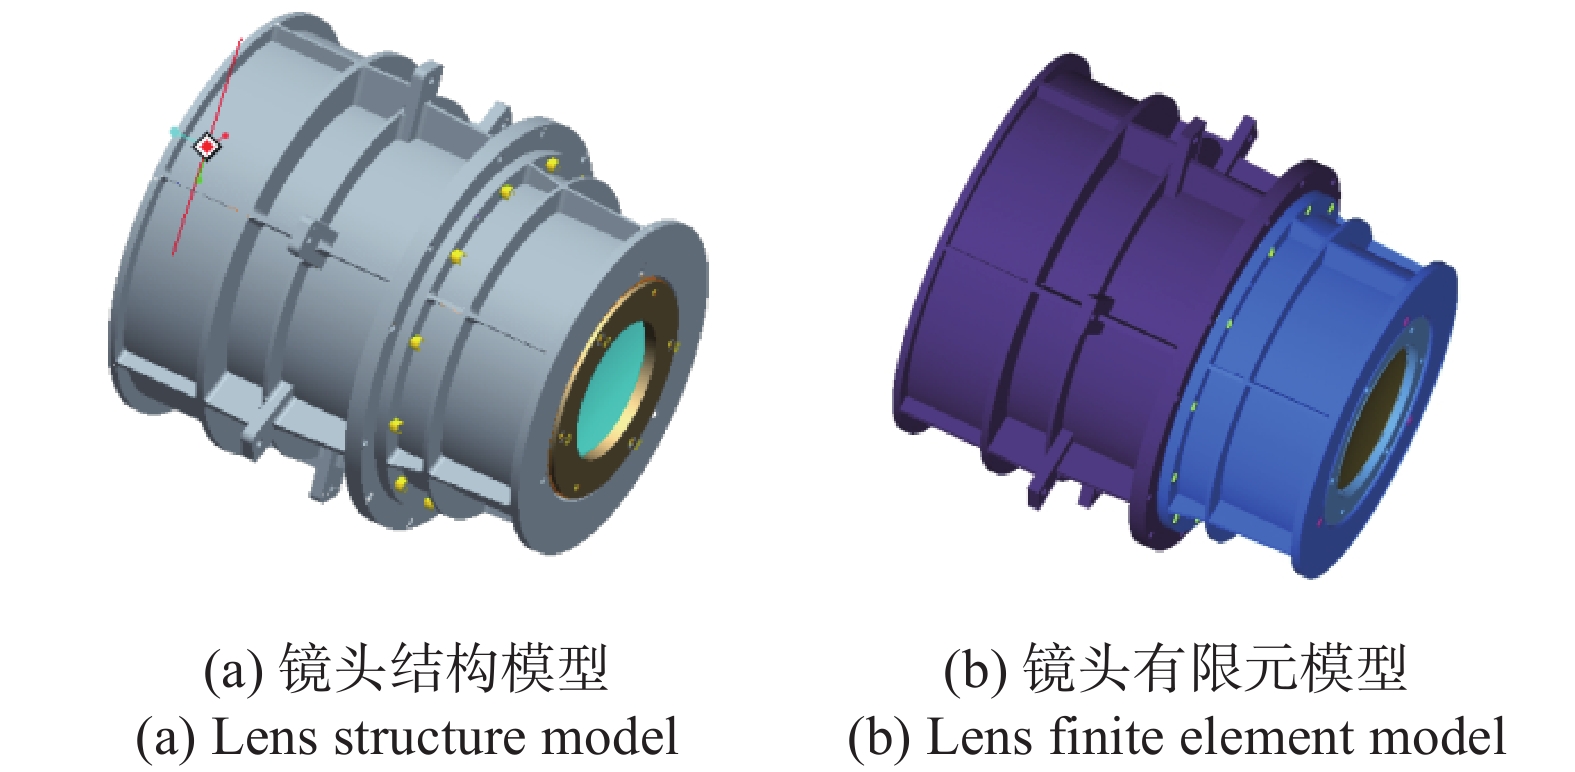 Design scheme of cryogenic lens shows